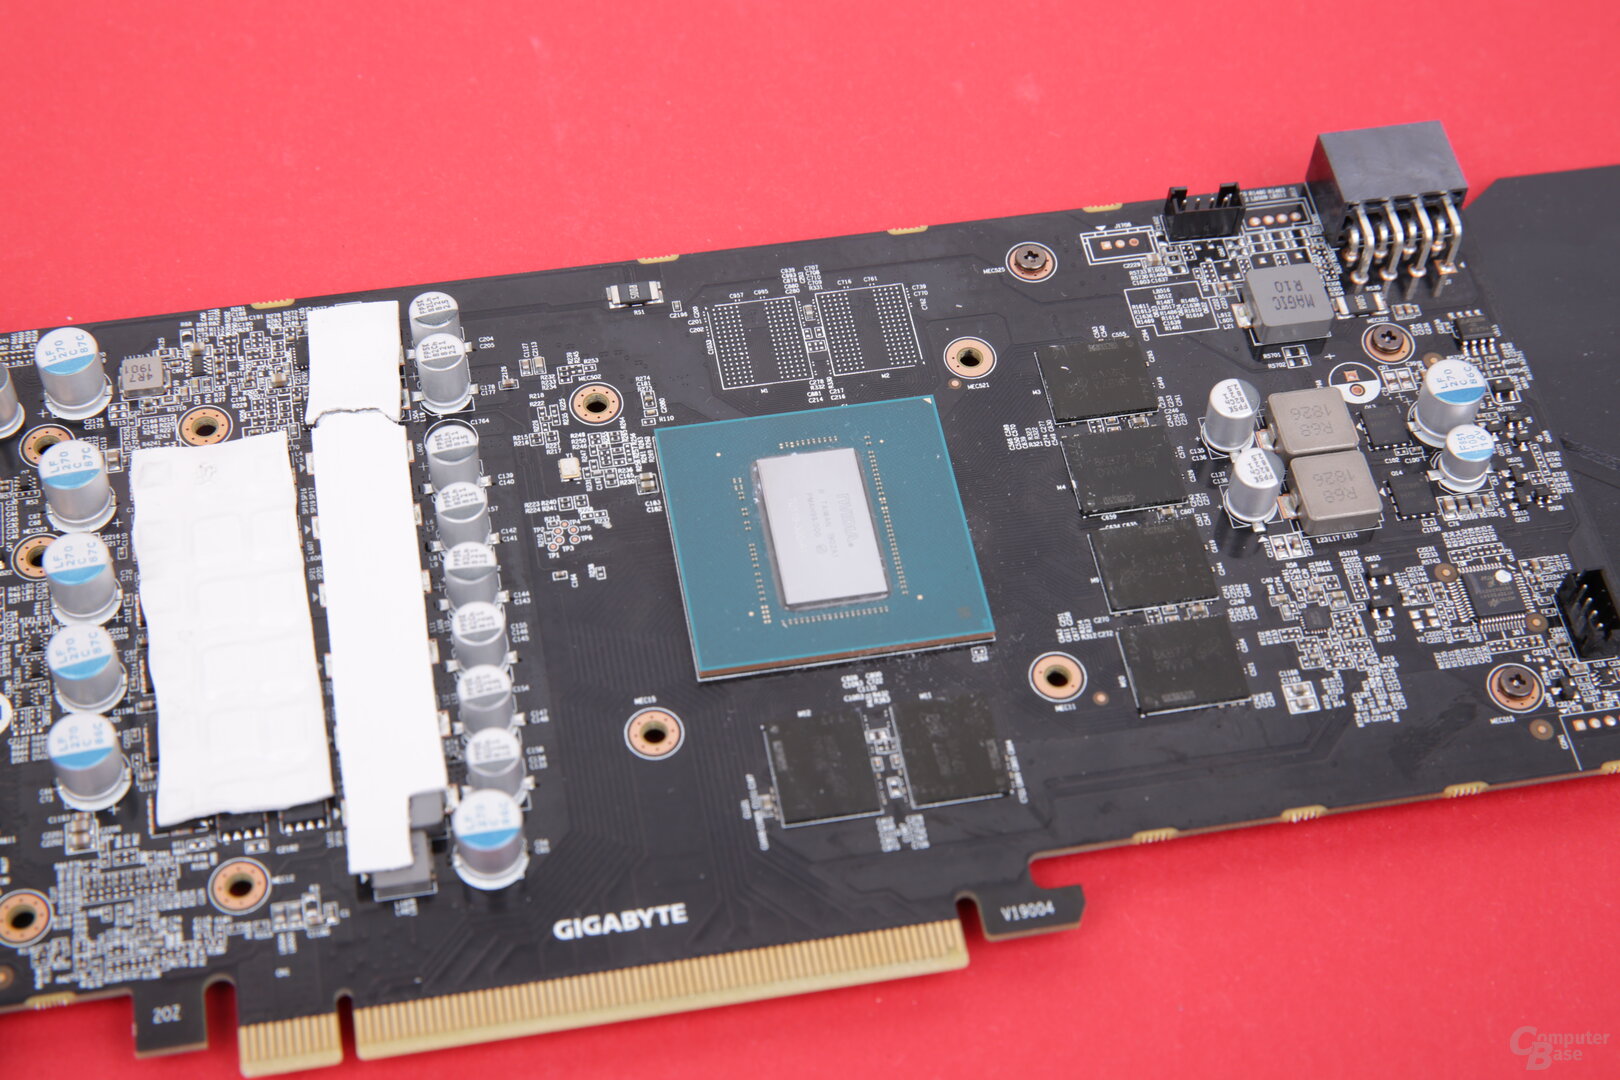 The TU116 GPU with GDDR5 memory